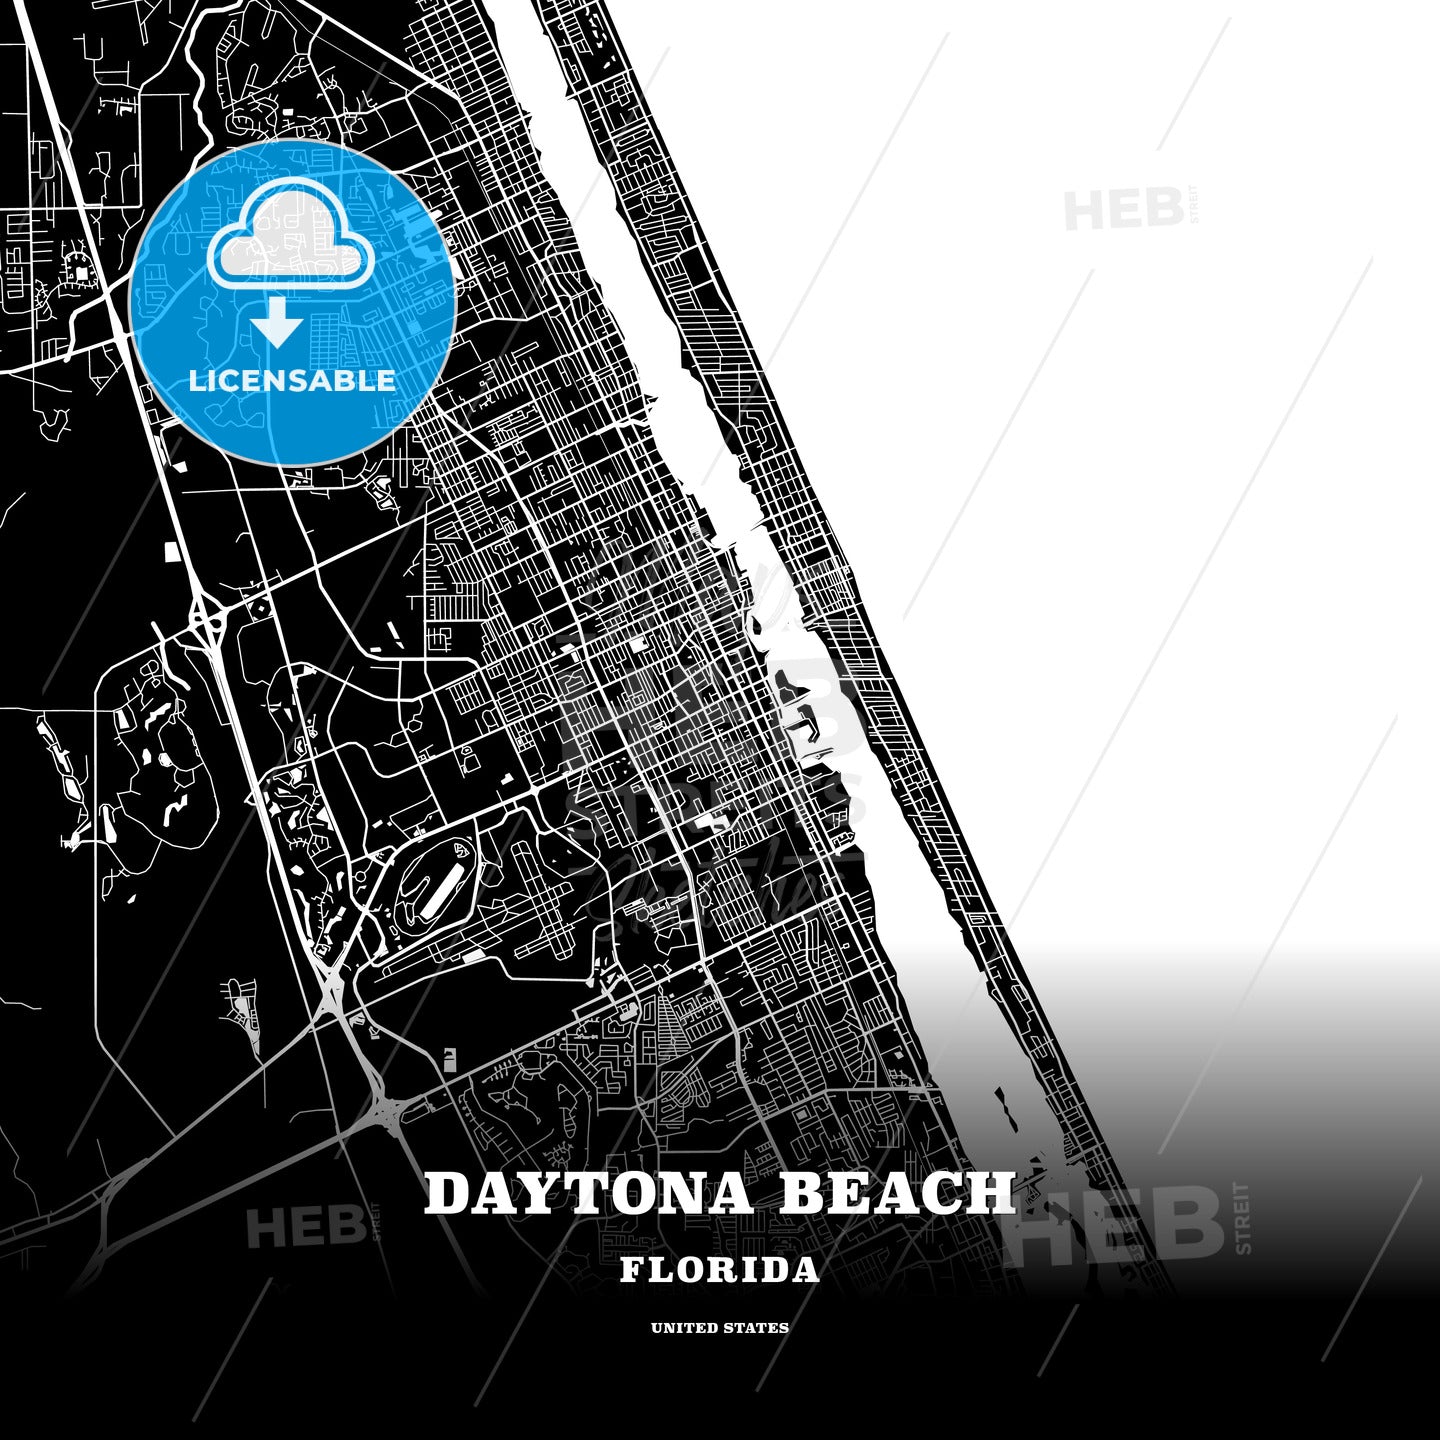 Daytona Beach, Florida, USA map